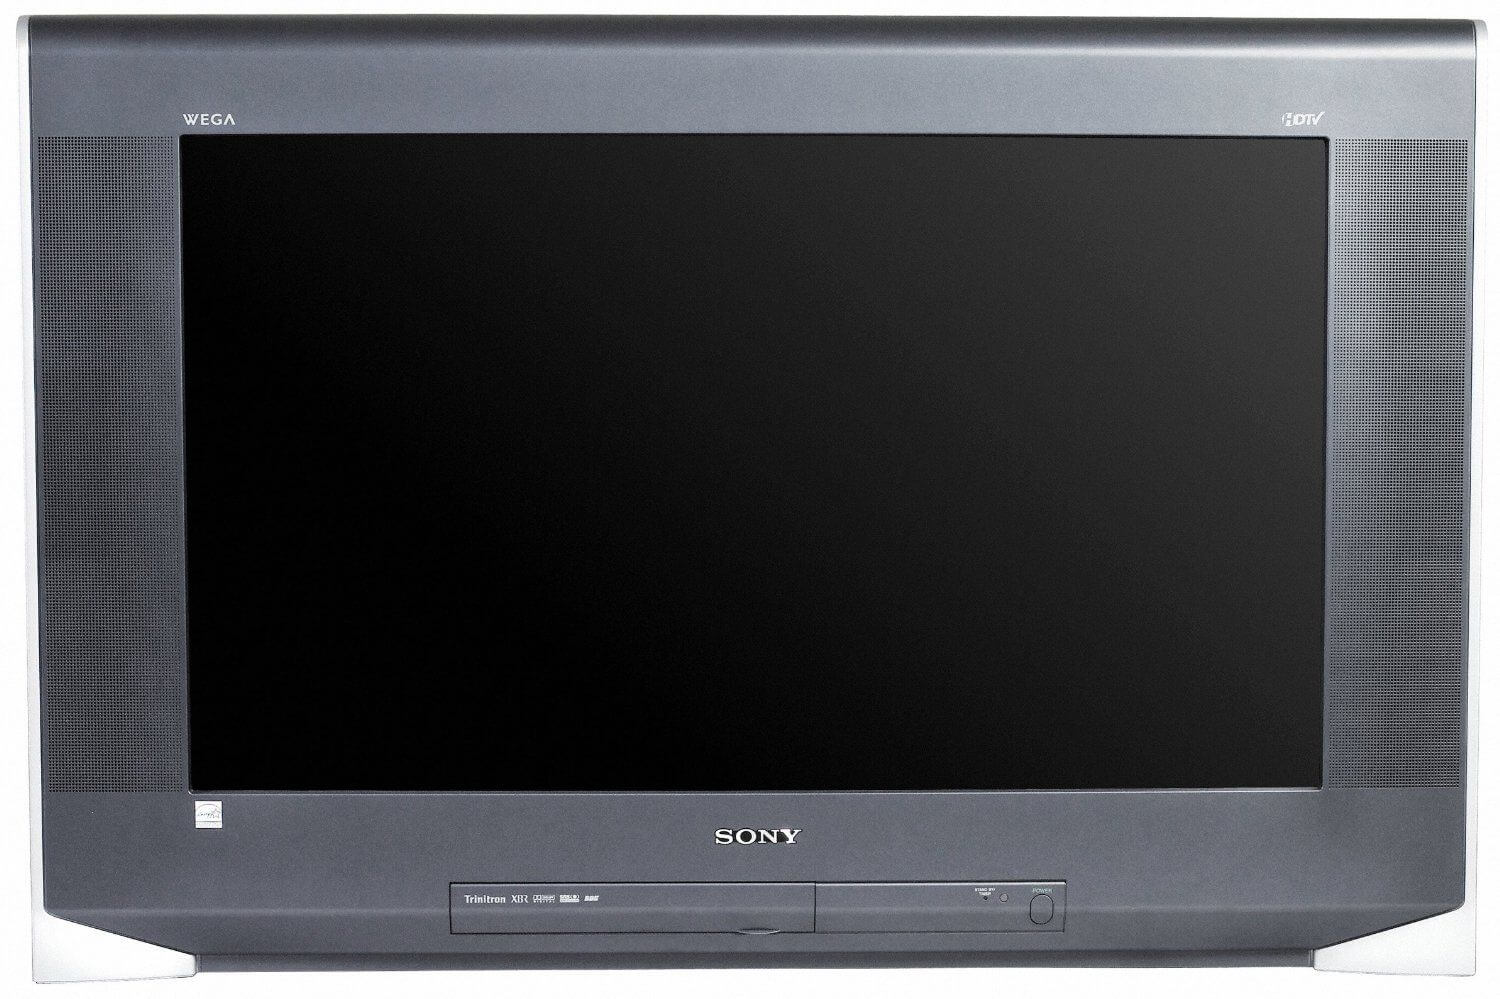 Купить телевизор 34. Sony KV-xxfv310. Телевизор Sony Wega Trinitron. Телевизор Sony Trinitron ЭЛТ. Старый телевизор Sony Trinitron.